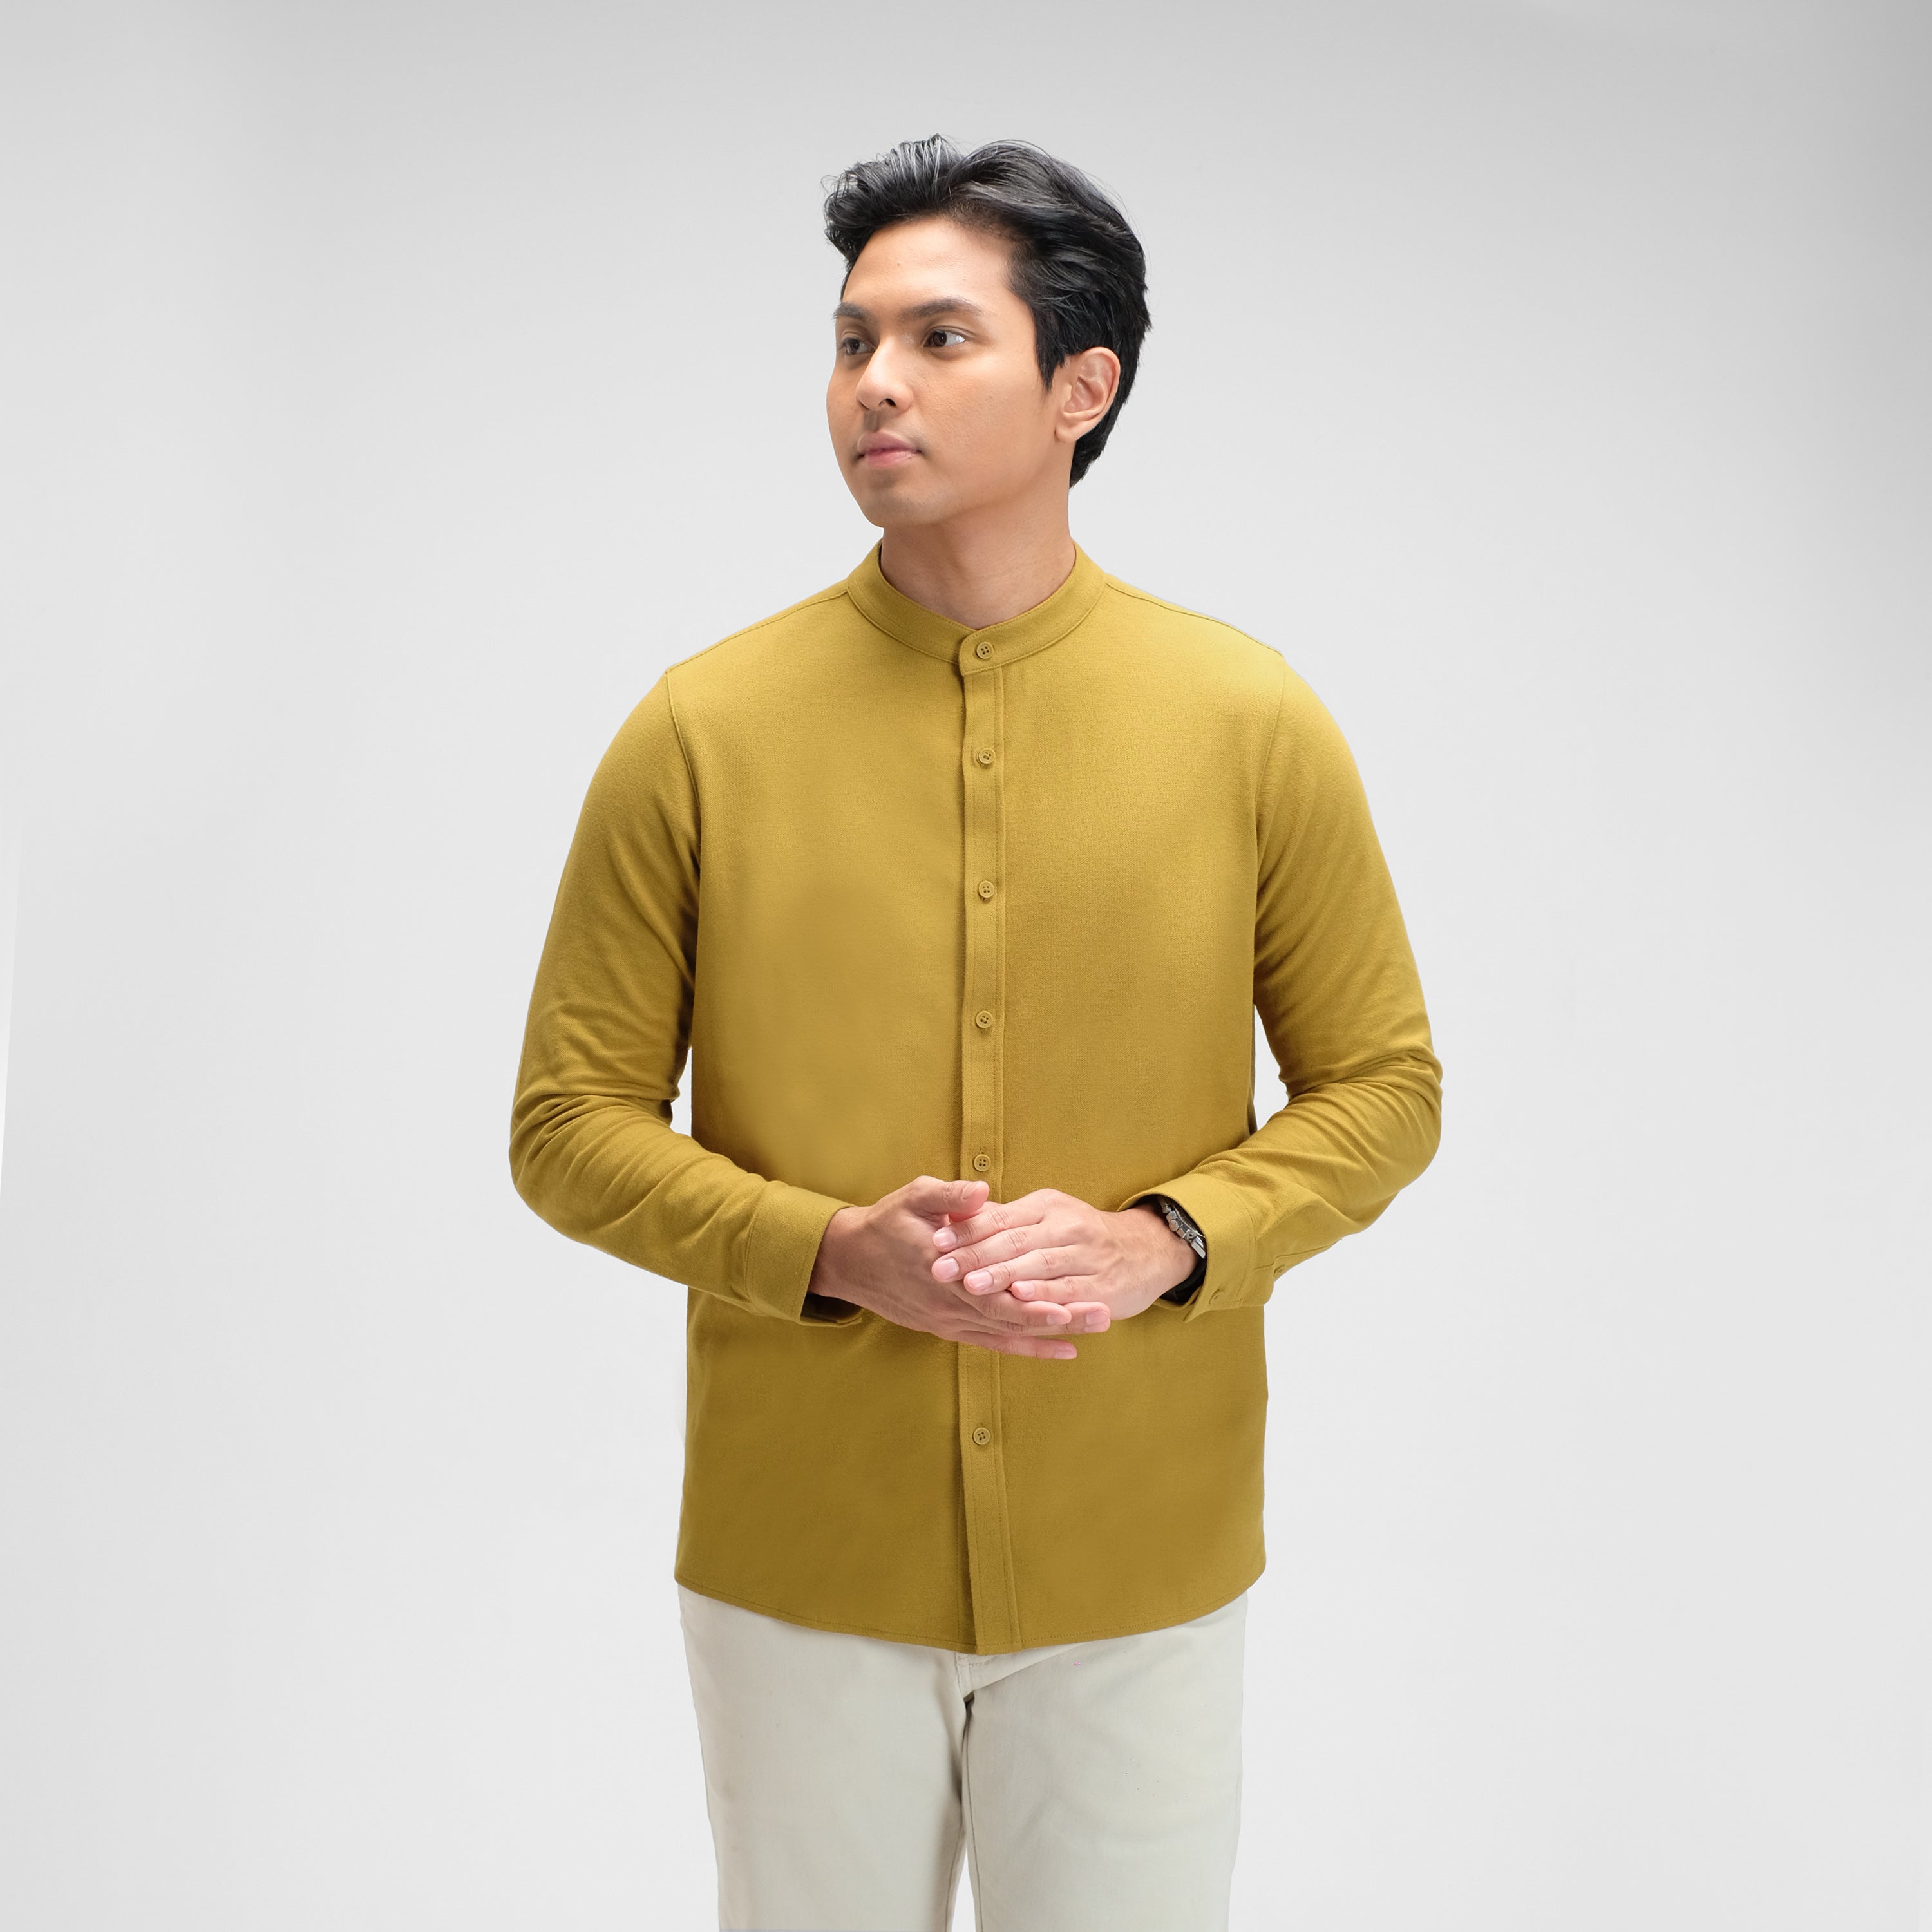 Brave ProComfort Shirt Long Sleeve New Colors